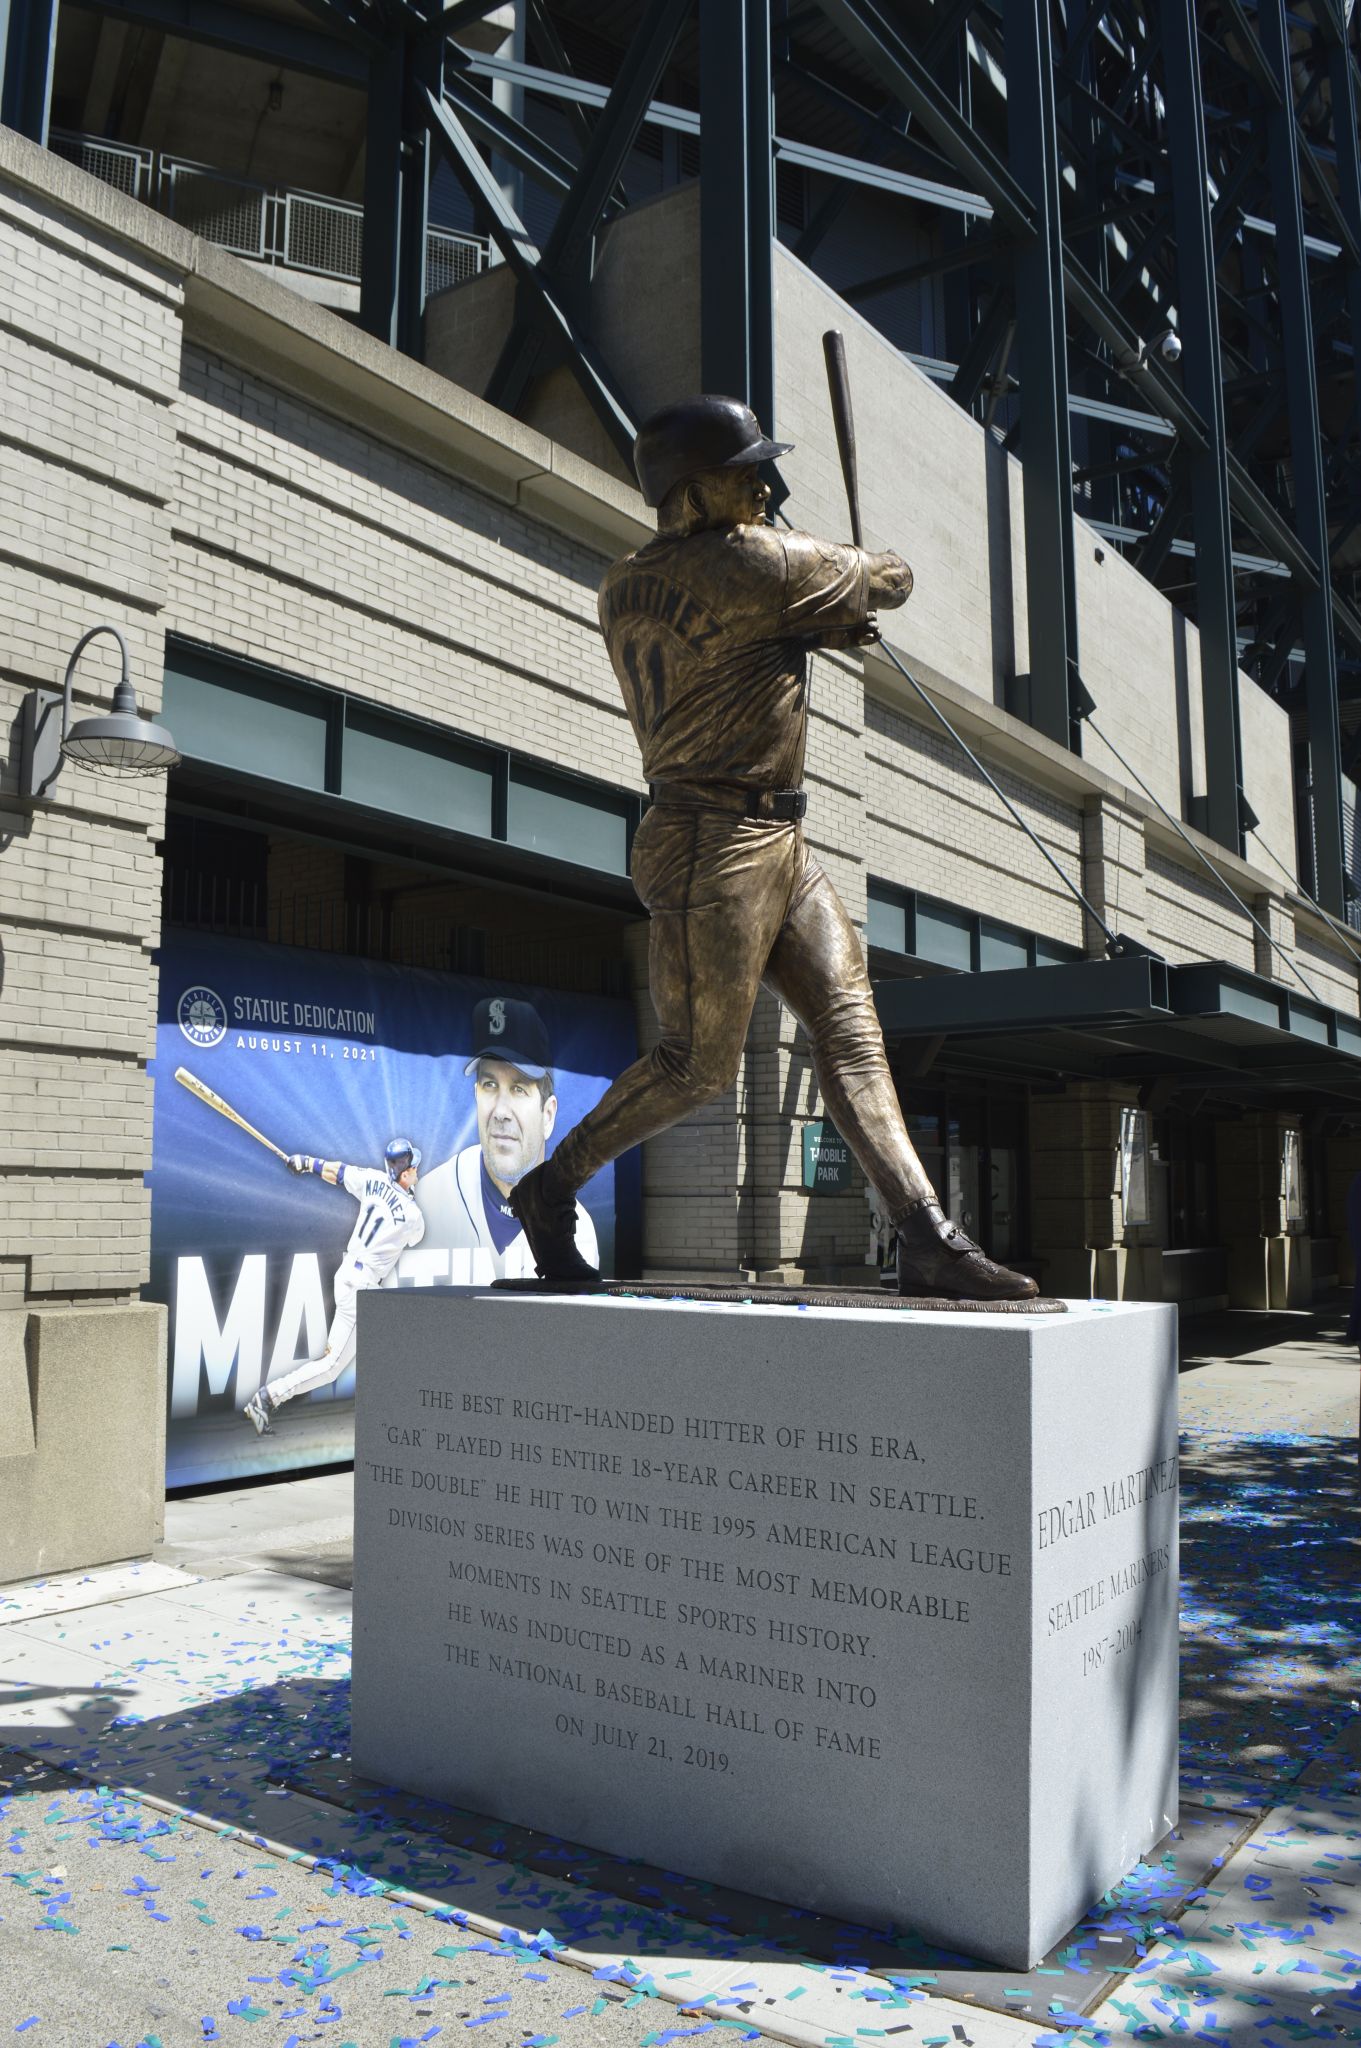 Mariners unveil statue for Edgar Martinez